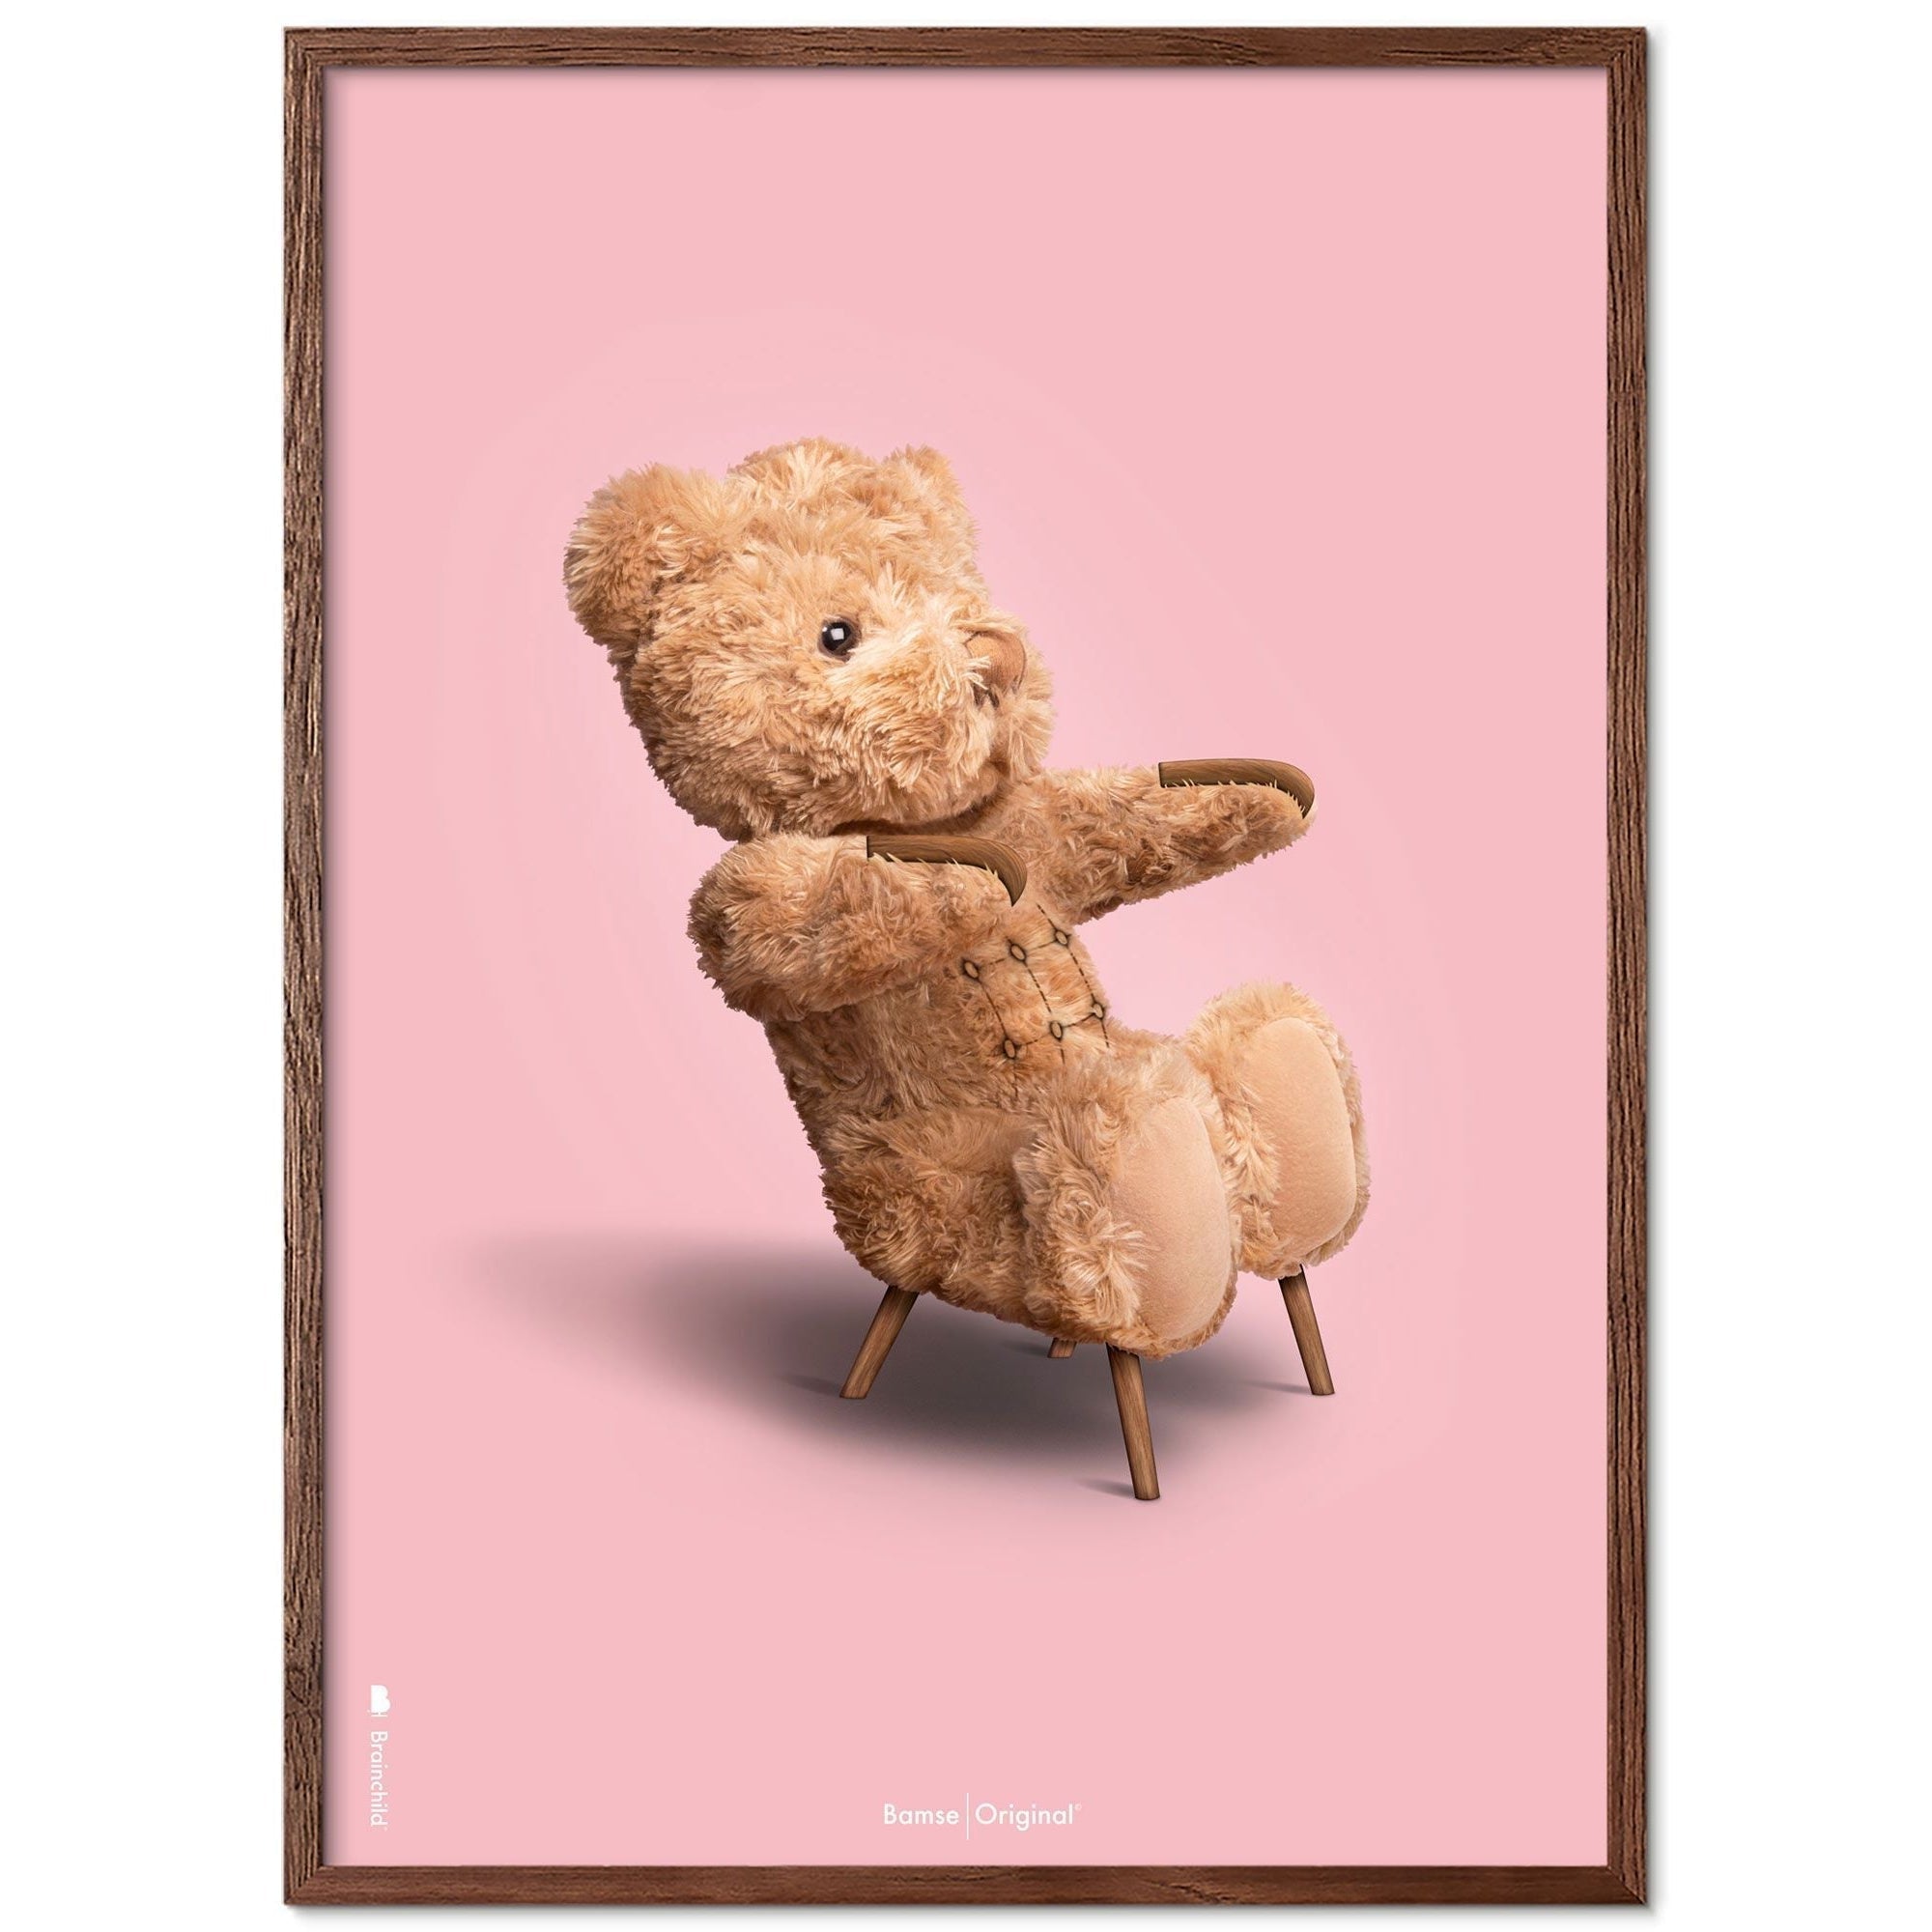 Brainchild Teddy Bear Classic Poster Dark Wood Frame Ram A5, Pink Bakgrunn